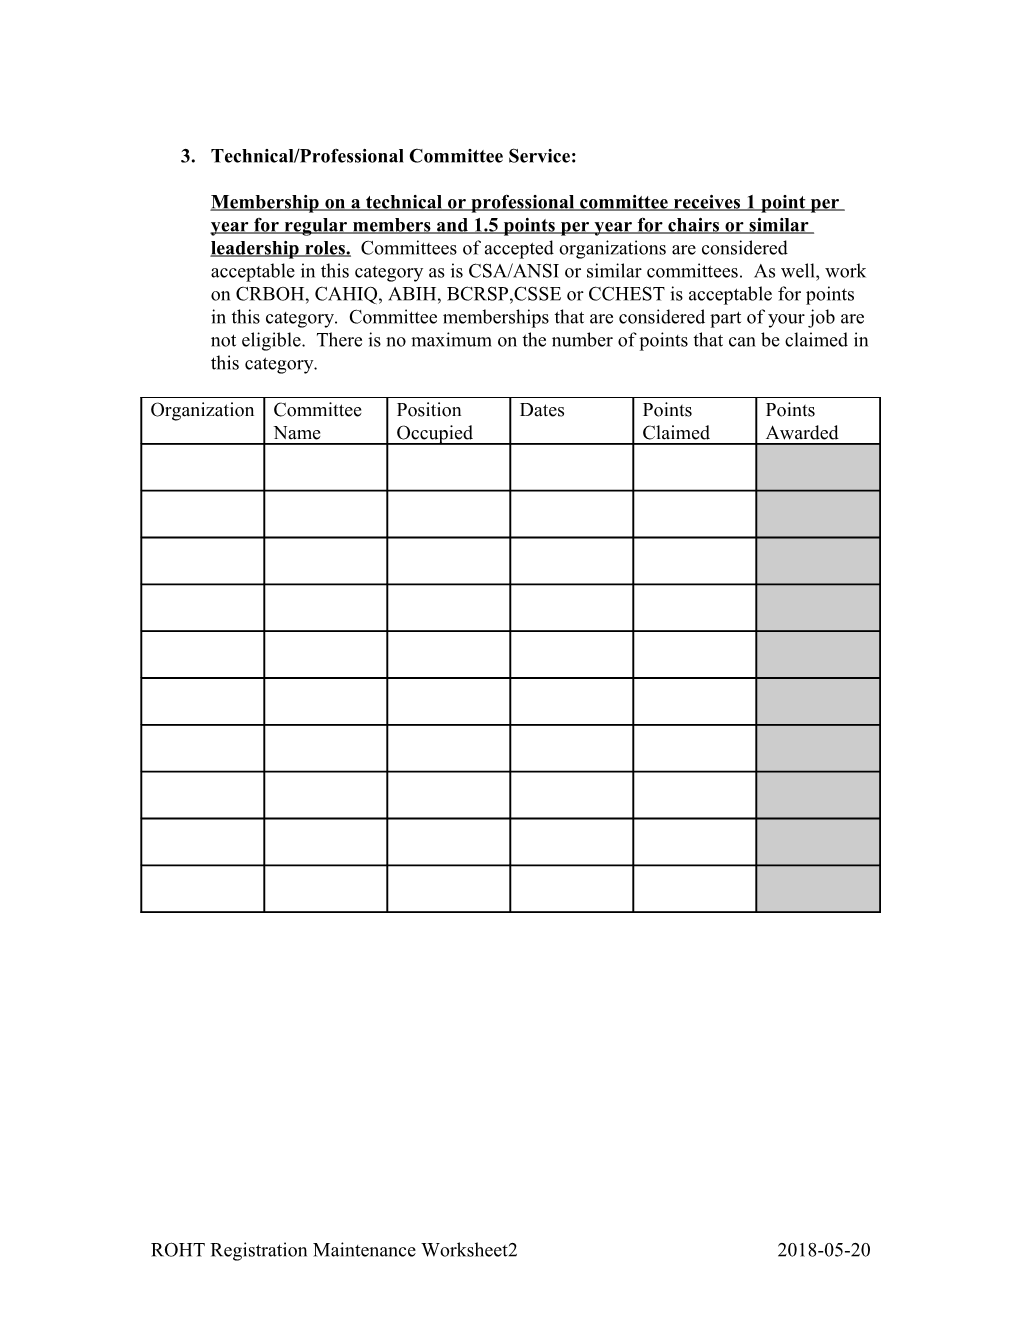 Roht Registration Maintenance Worksheet